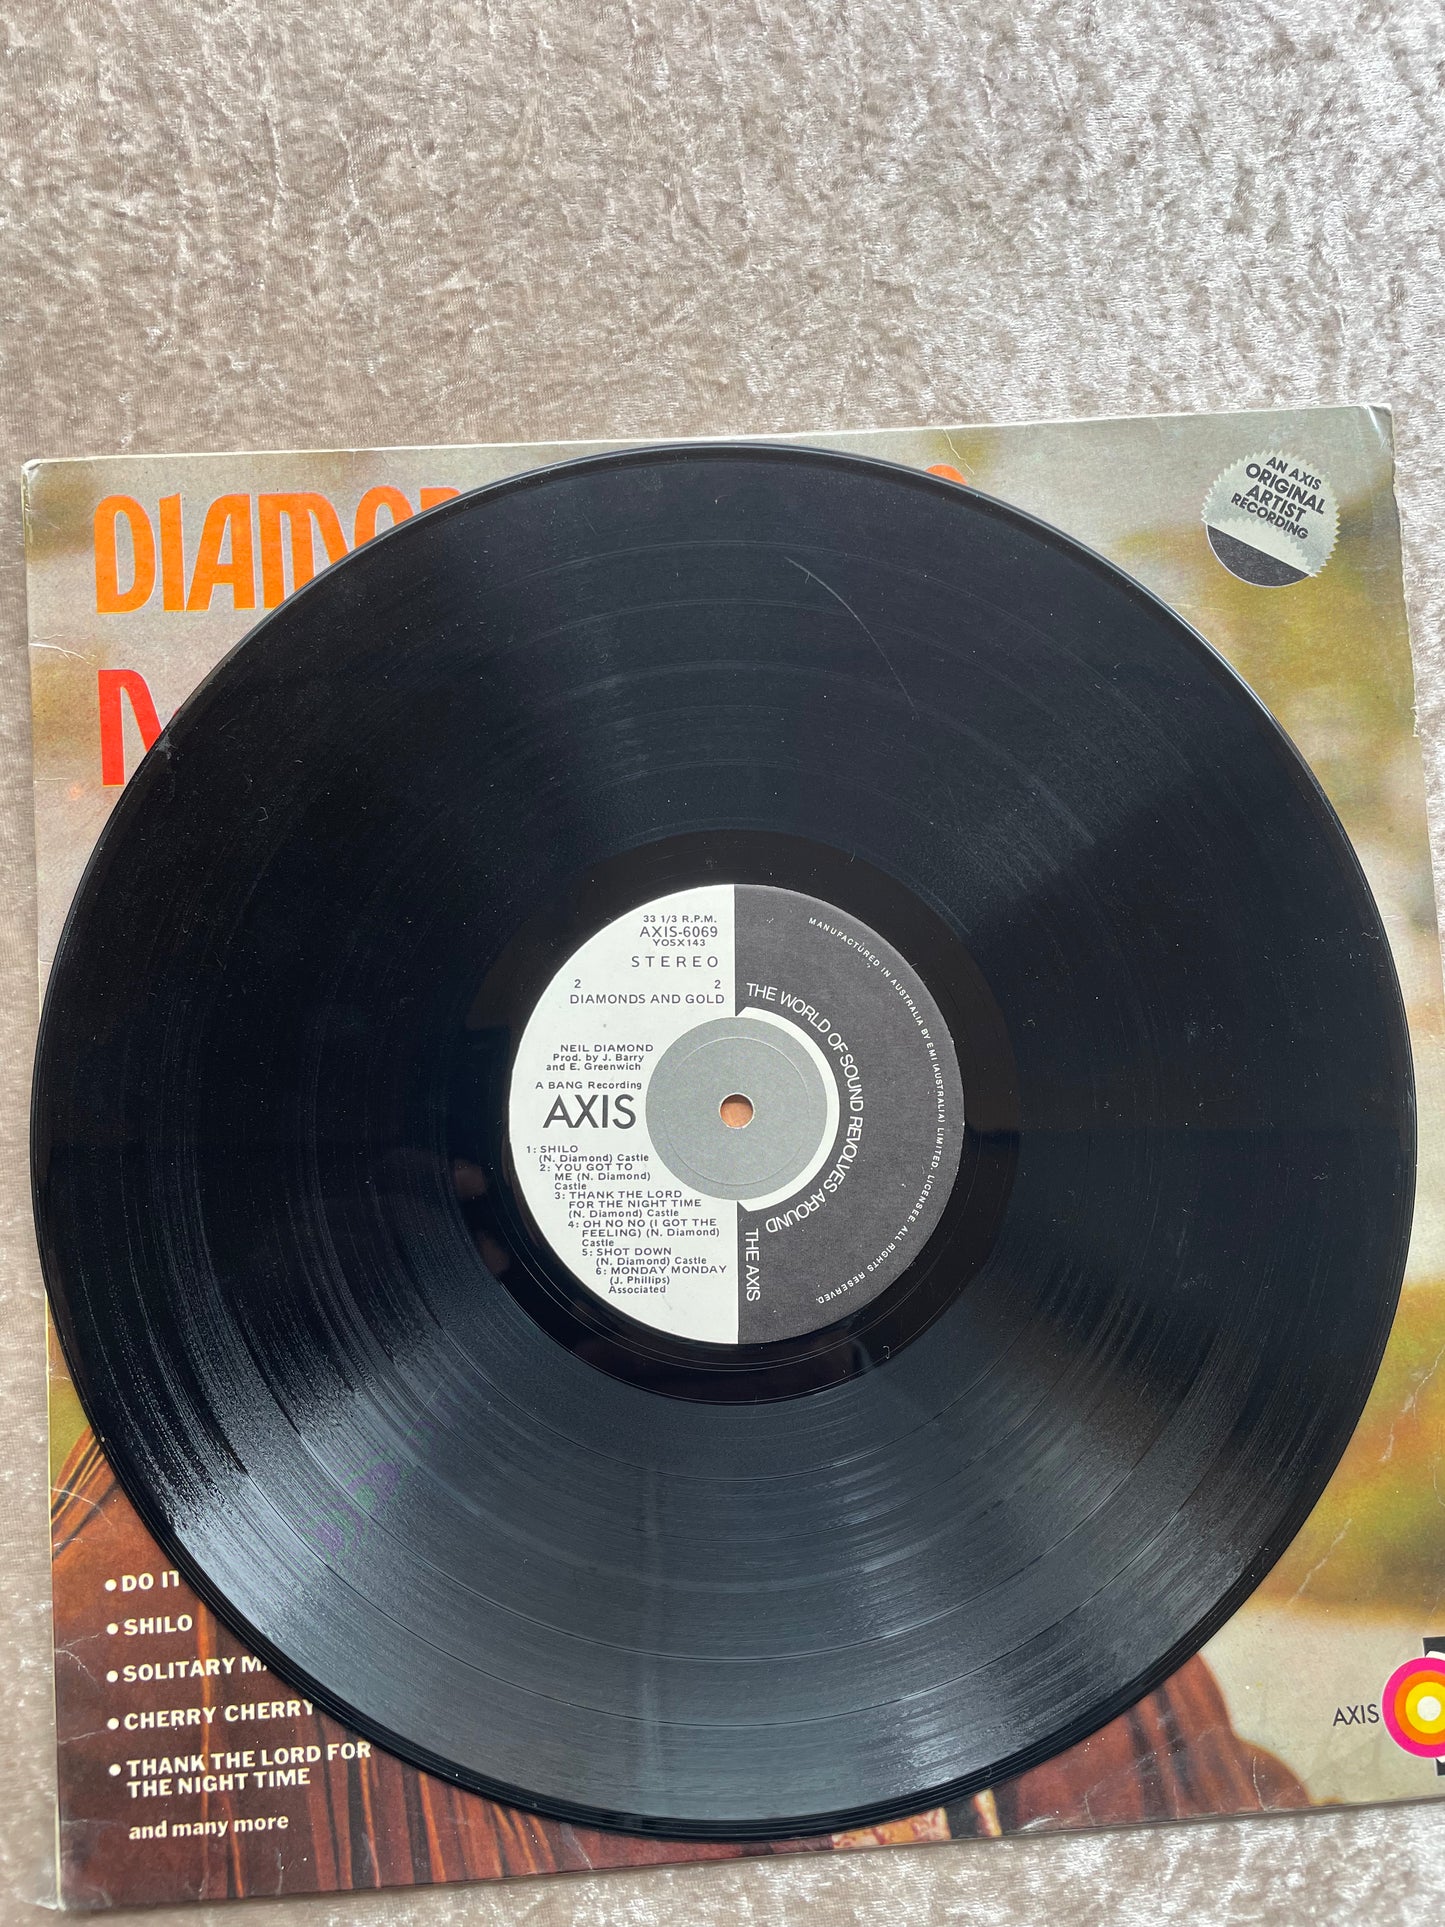 Vinyl Record LP Neil Diamond Diamond & Gold 1977